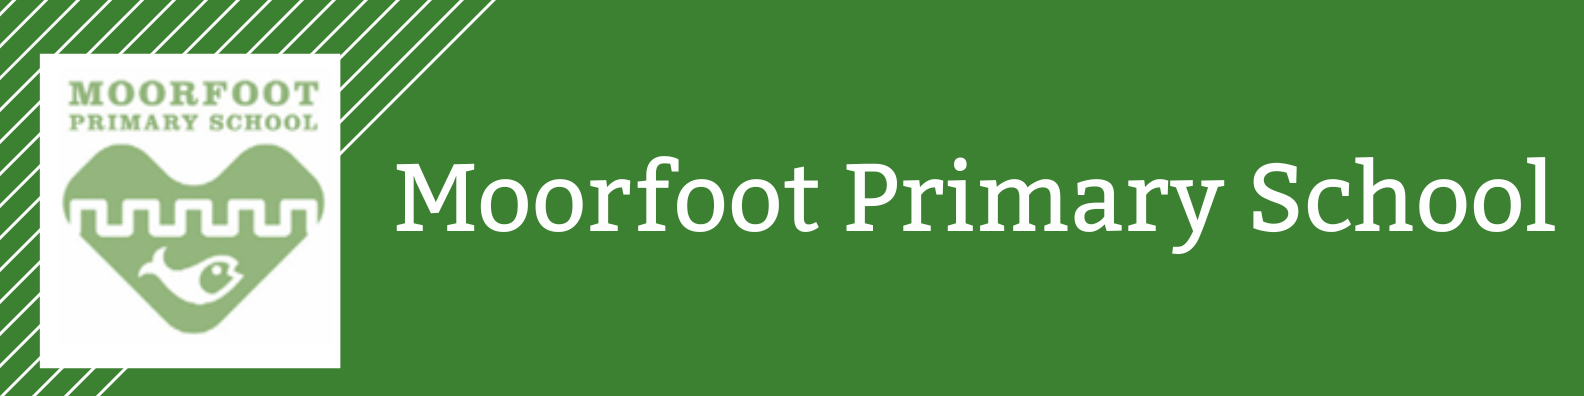 Moorfoot Primary School